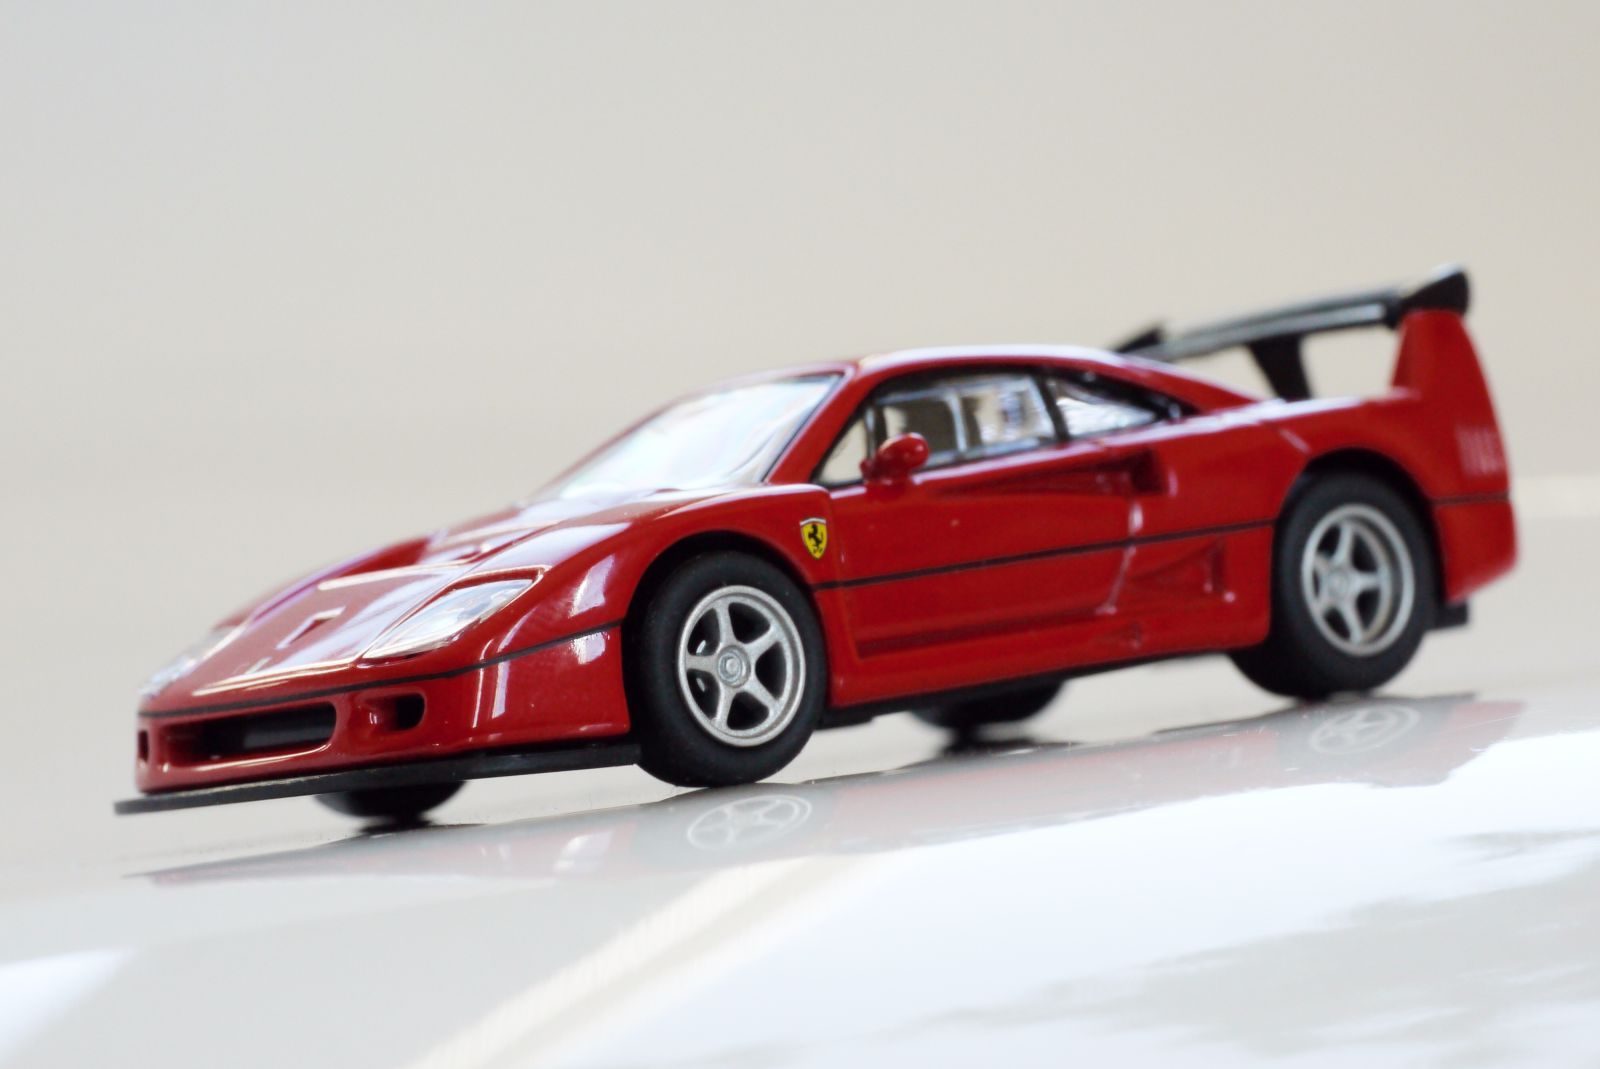 Illustration for article titled Kyosho Ferrari 4 1/64 #31 - Project Prancing Horse #31 - 1989 Ferrari F40 Competizione